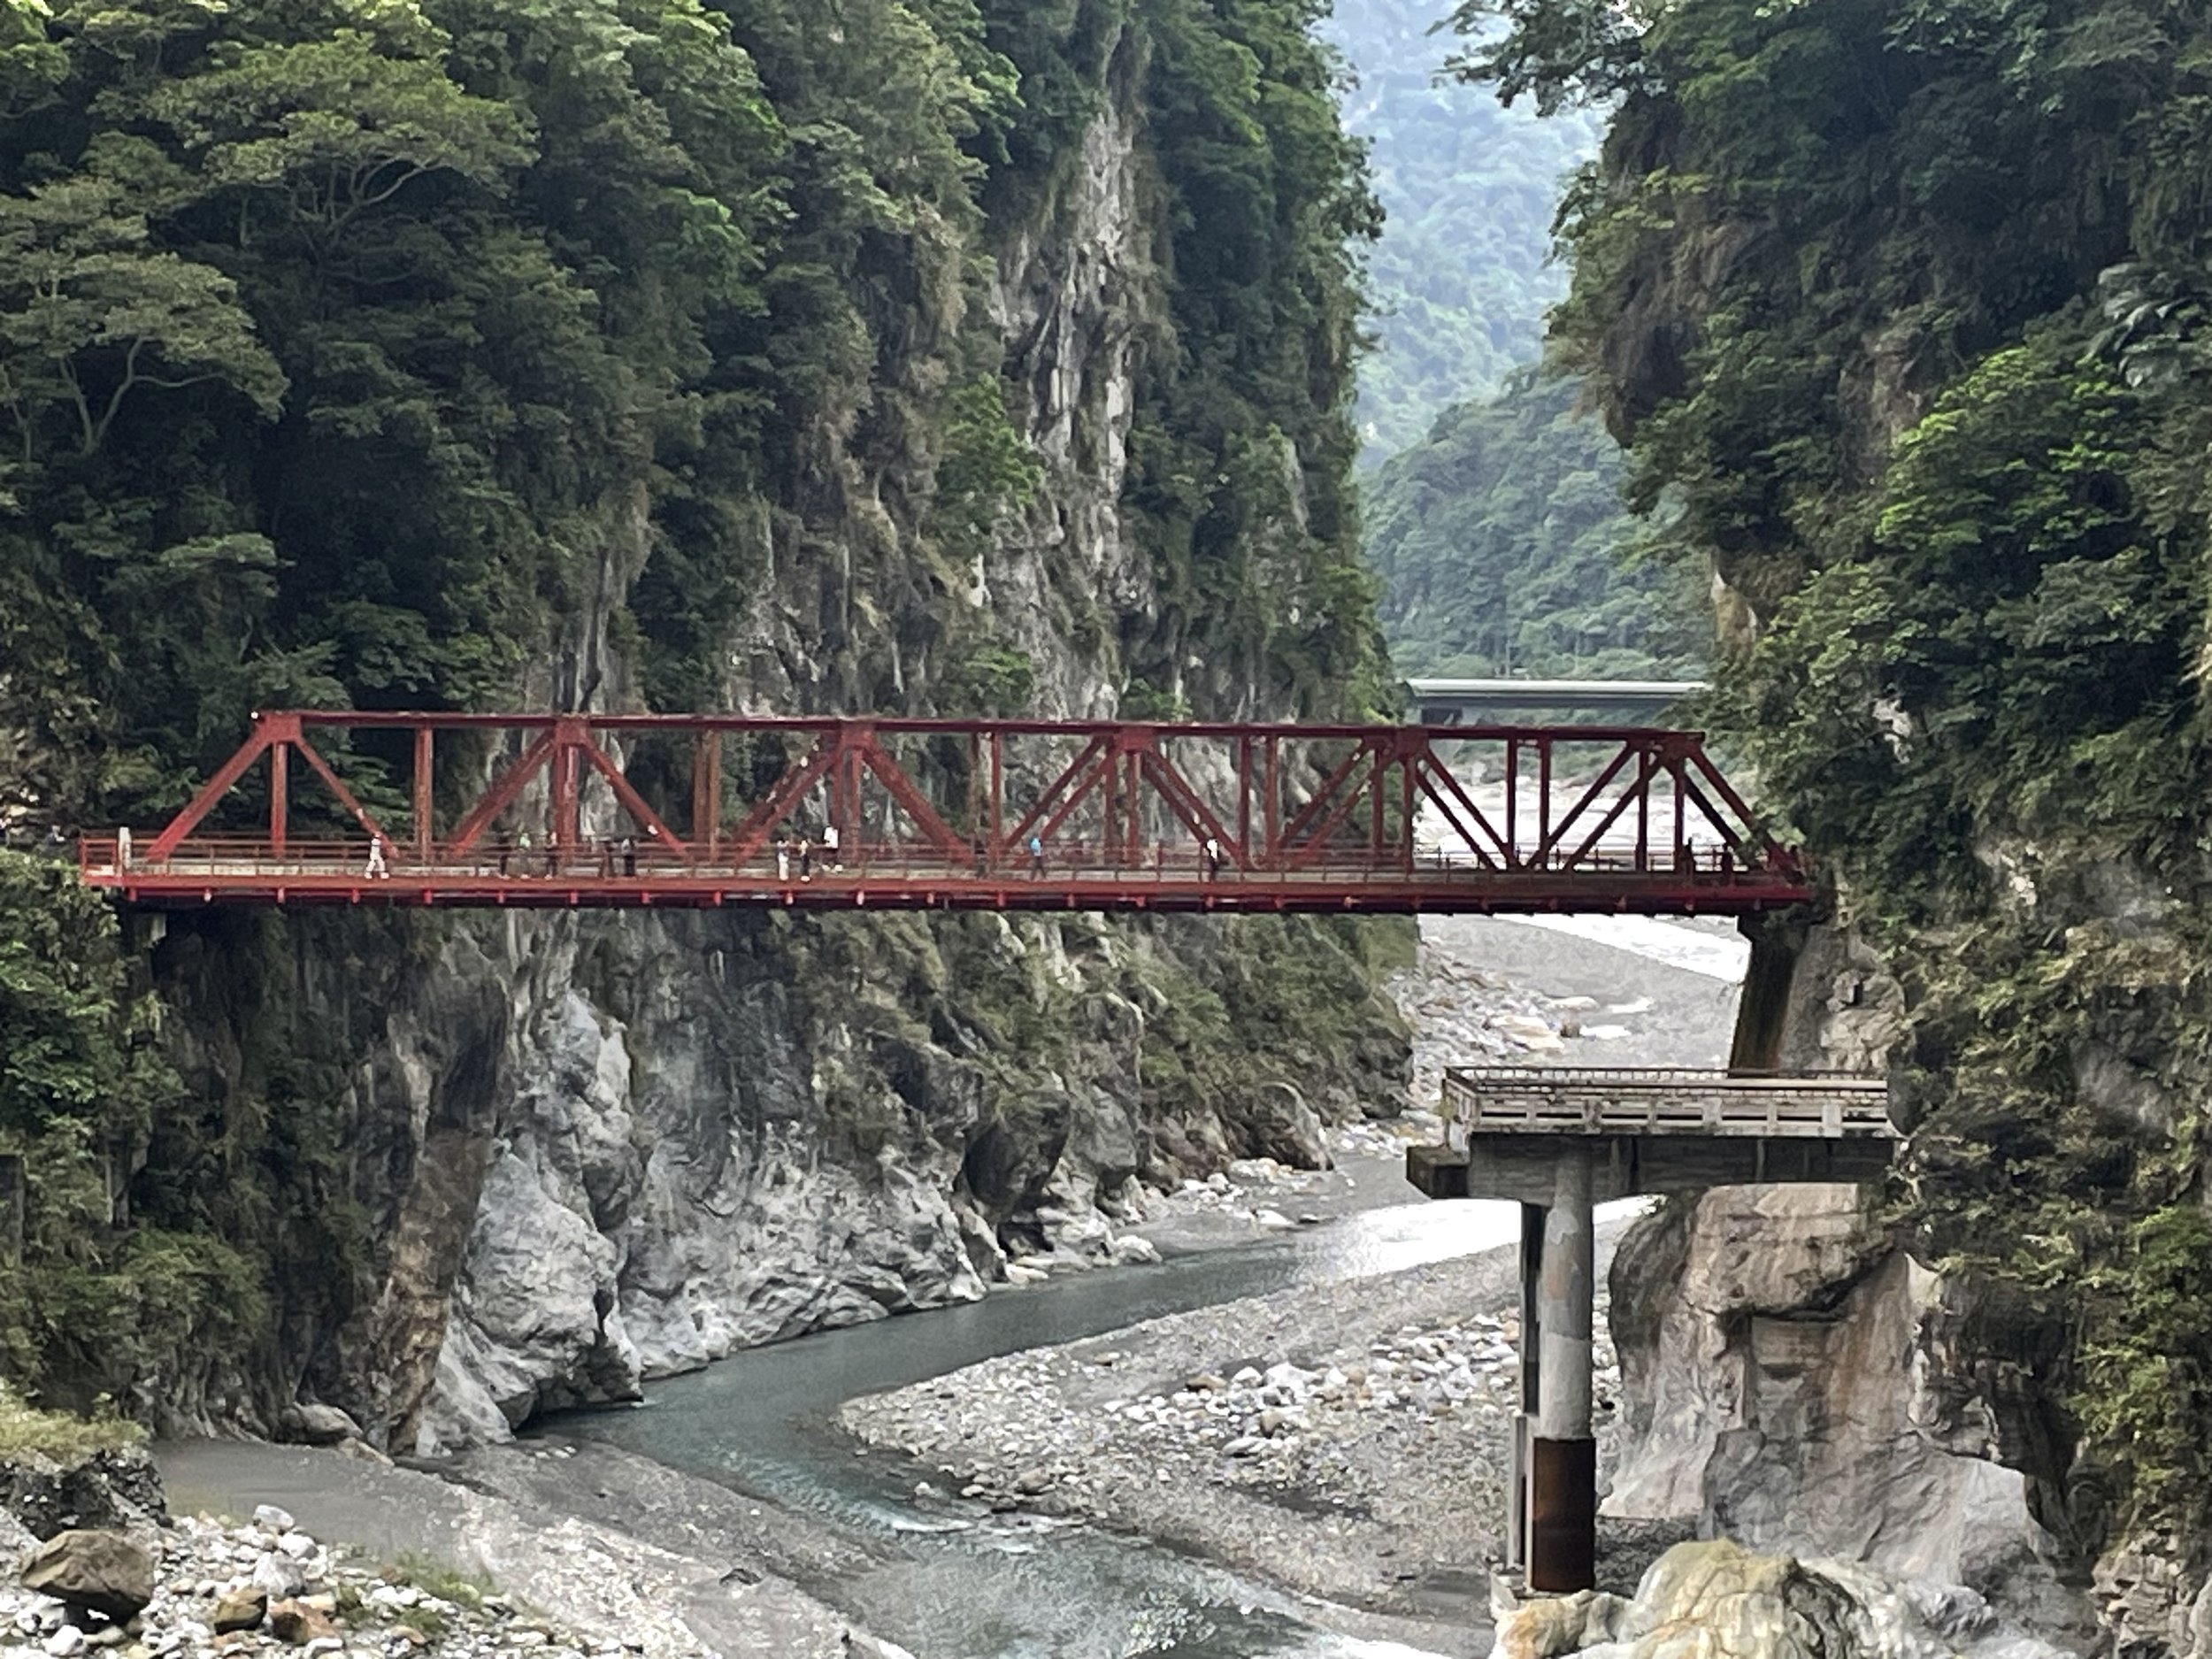 The old old road bridge, and the old road bridge, Shrine of the Eternal Spring, Taroko Gorge